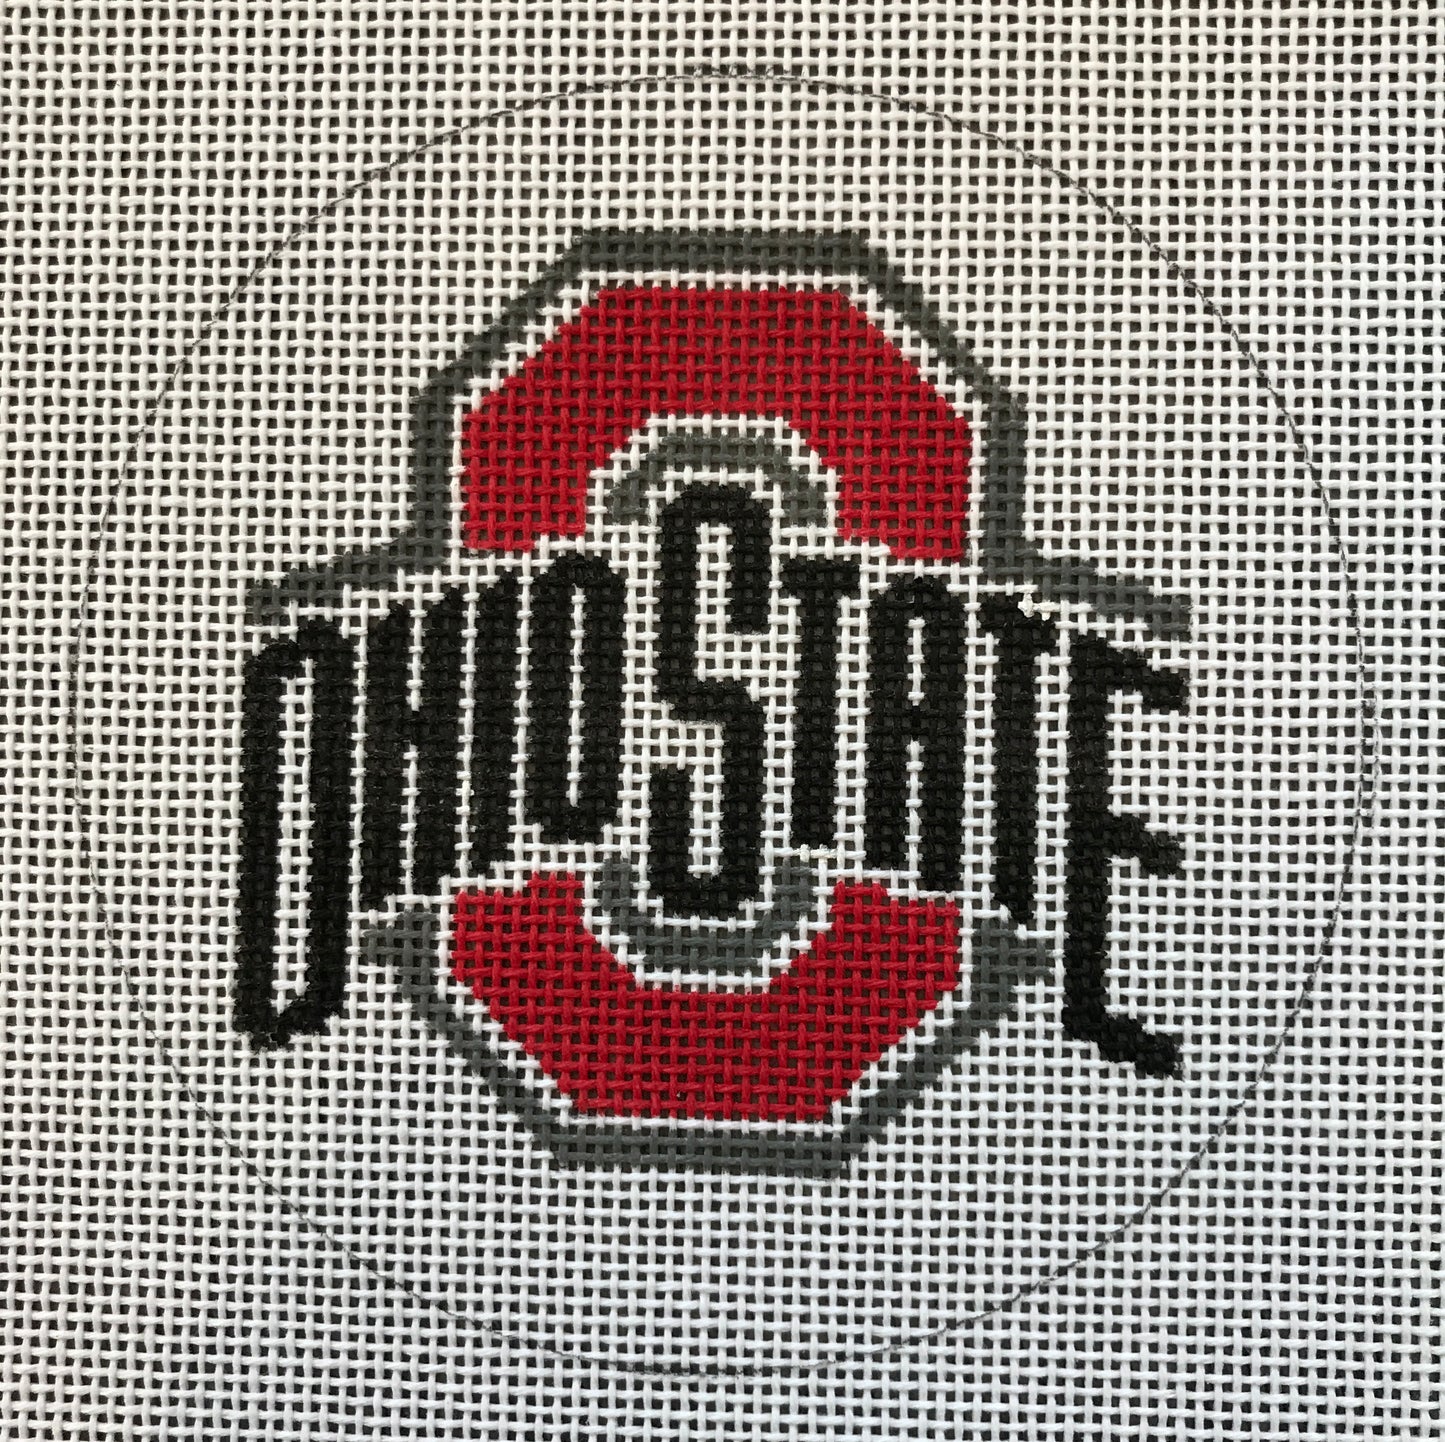 The Ohio State University round